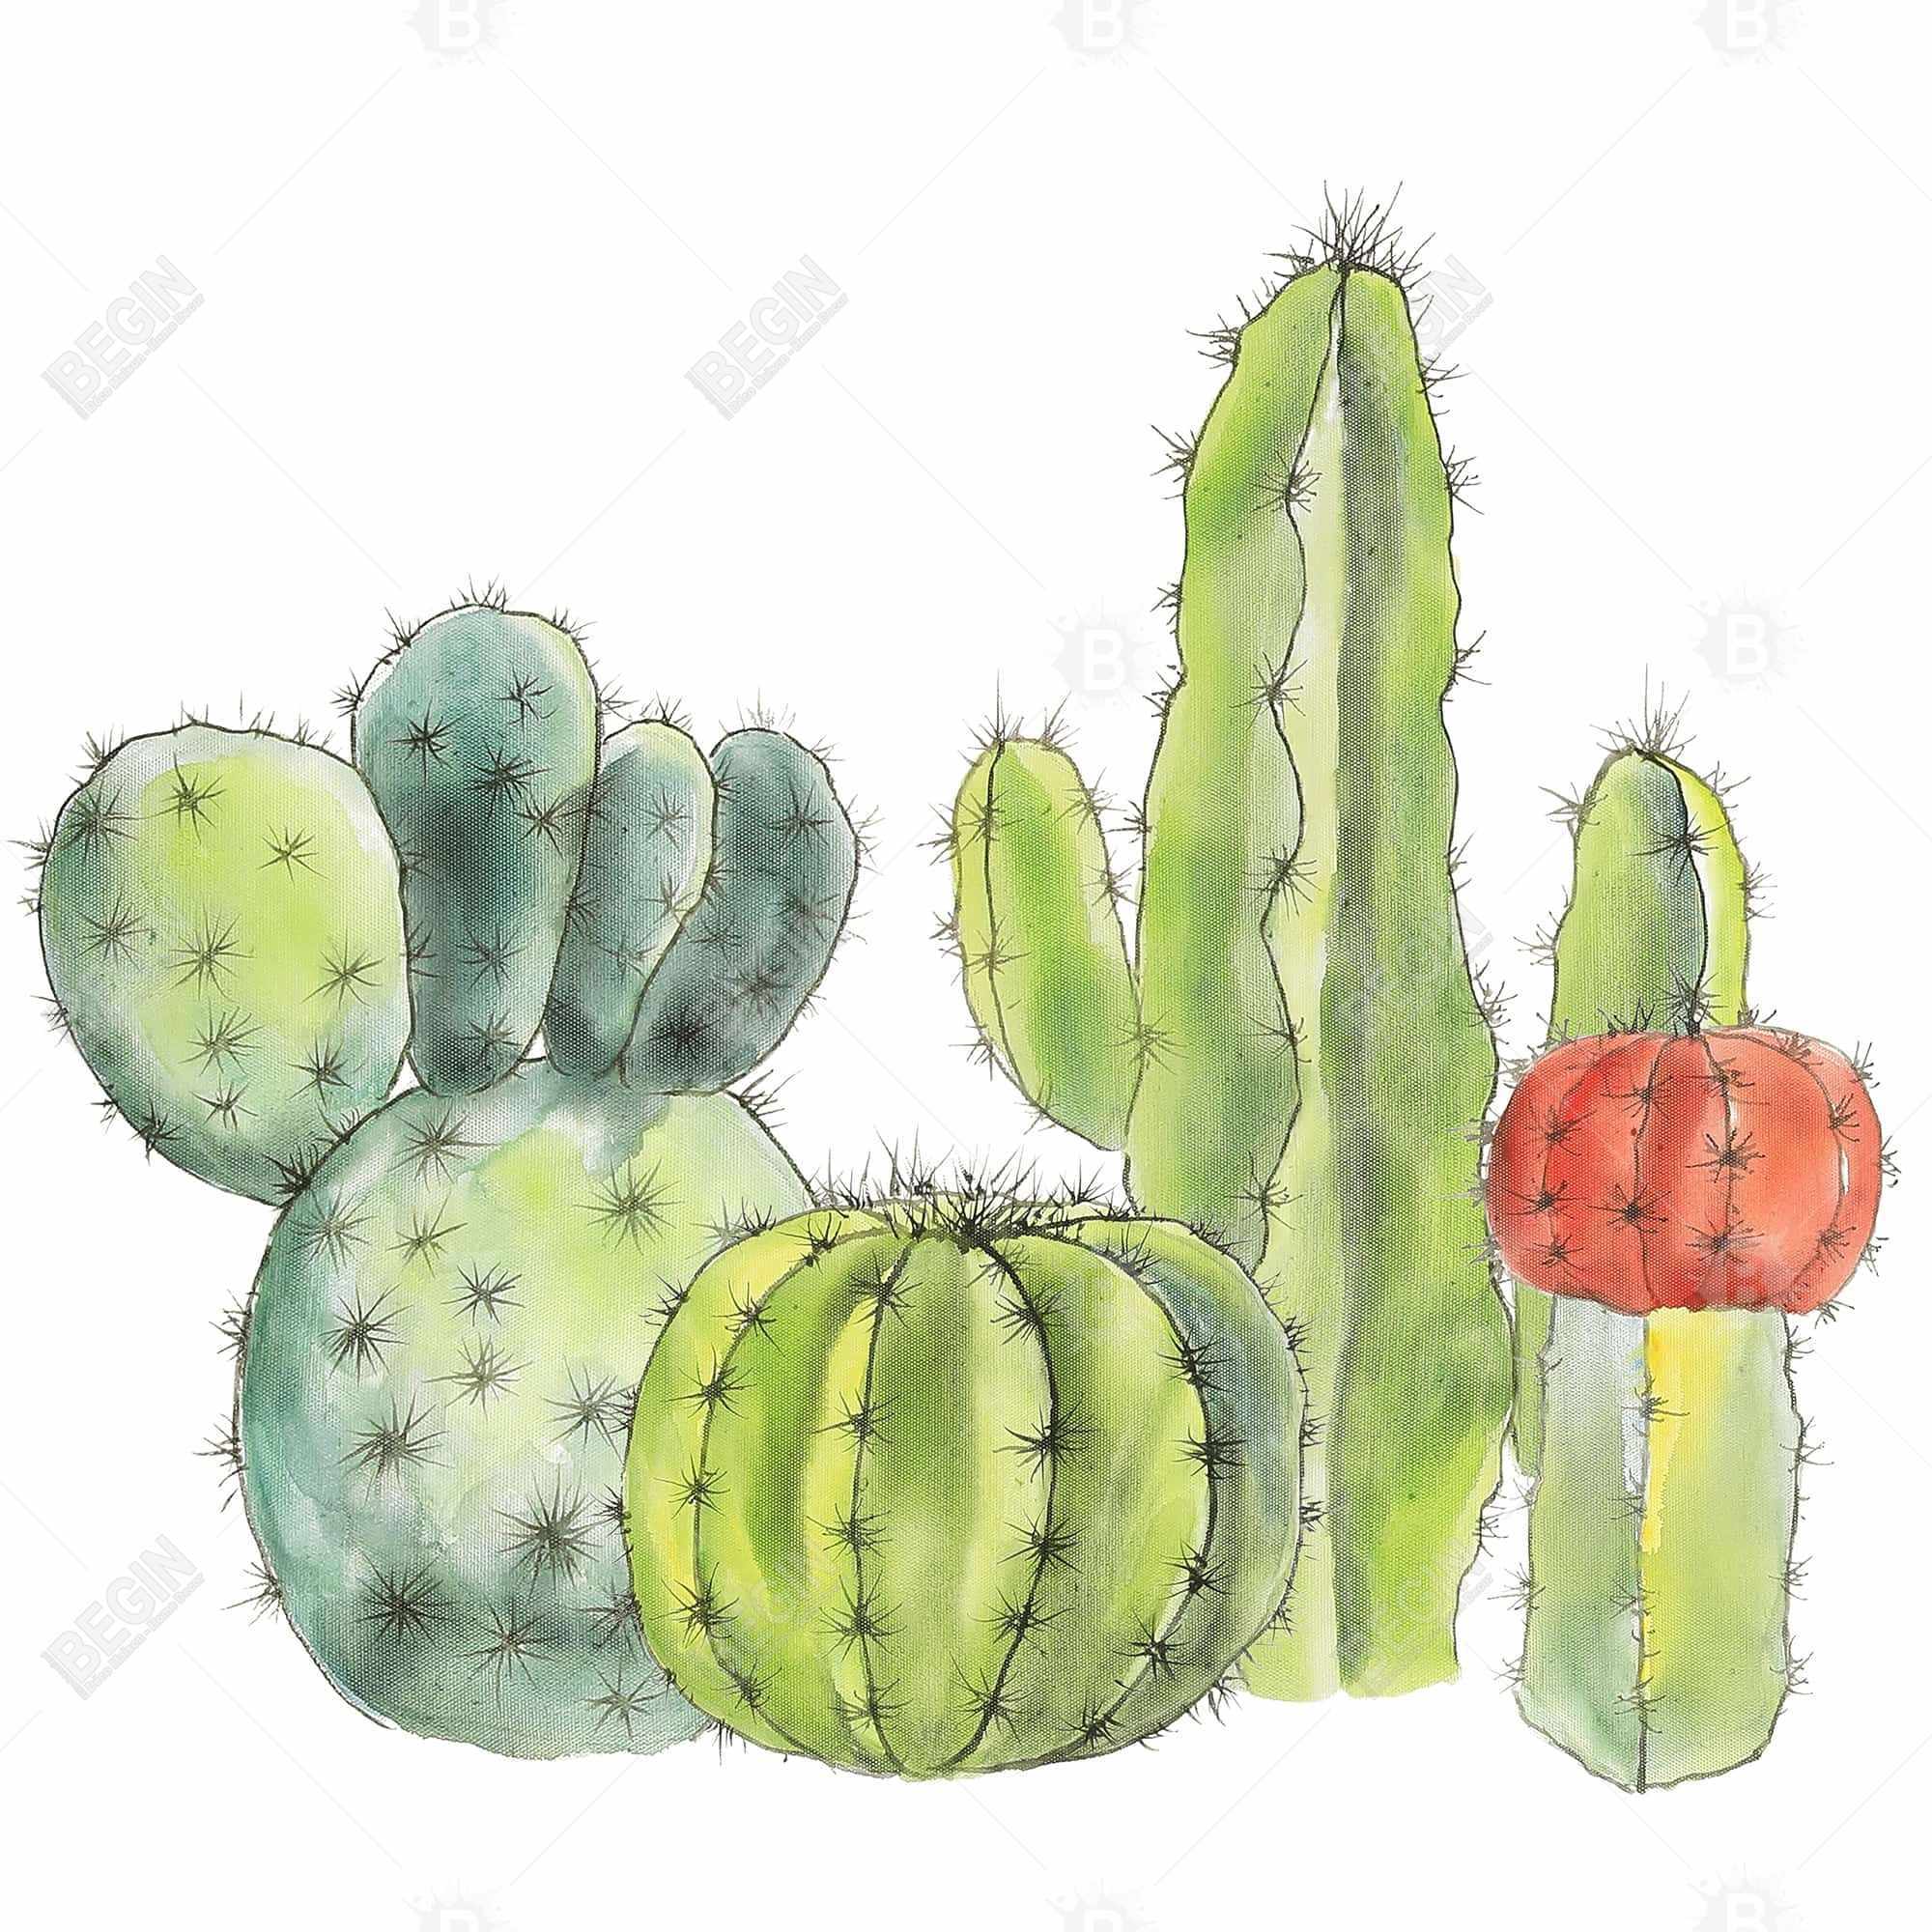 Rassemblement de petits cactus